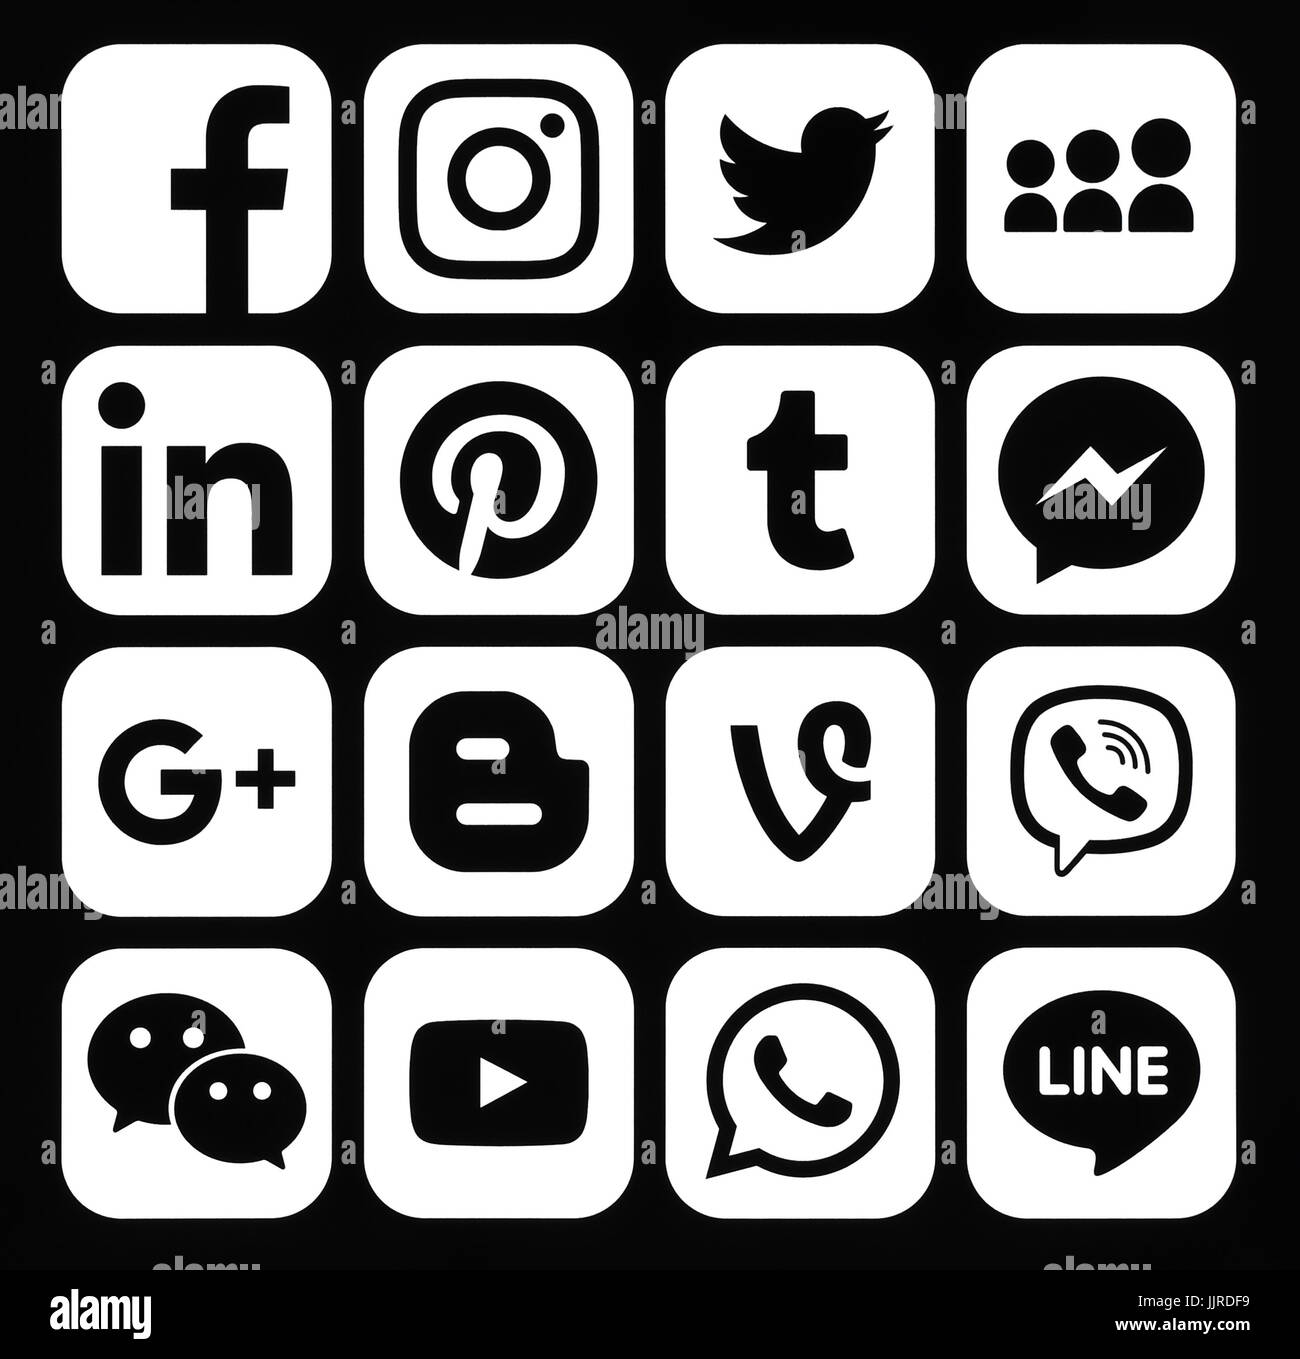 Kiev Ukraine December 05 16 Collection Of Popular White Social Media Icons Printed On Black Paper Facebook Twitter Google Plus Instagram P Stock Photo Alamy